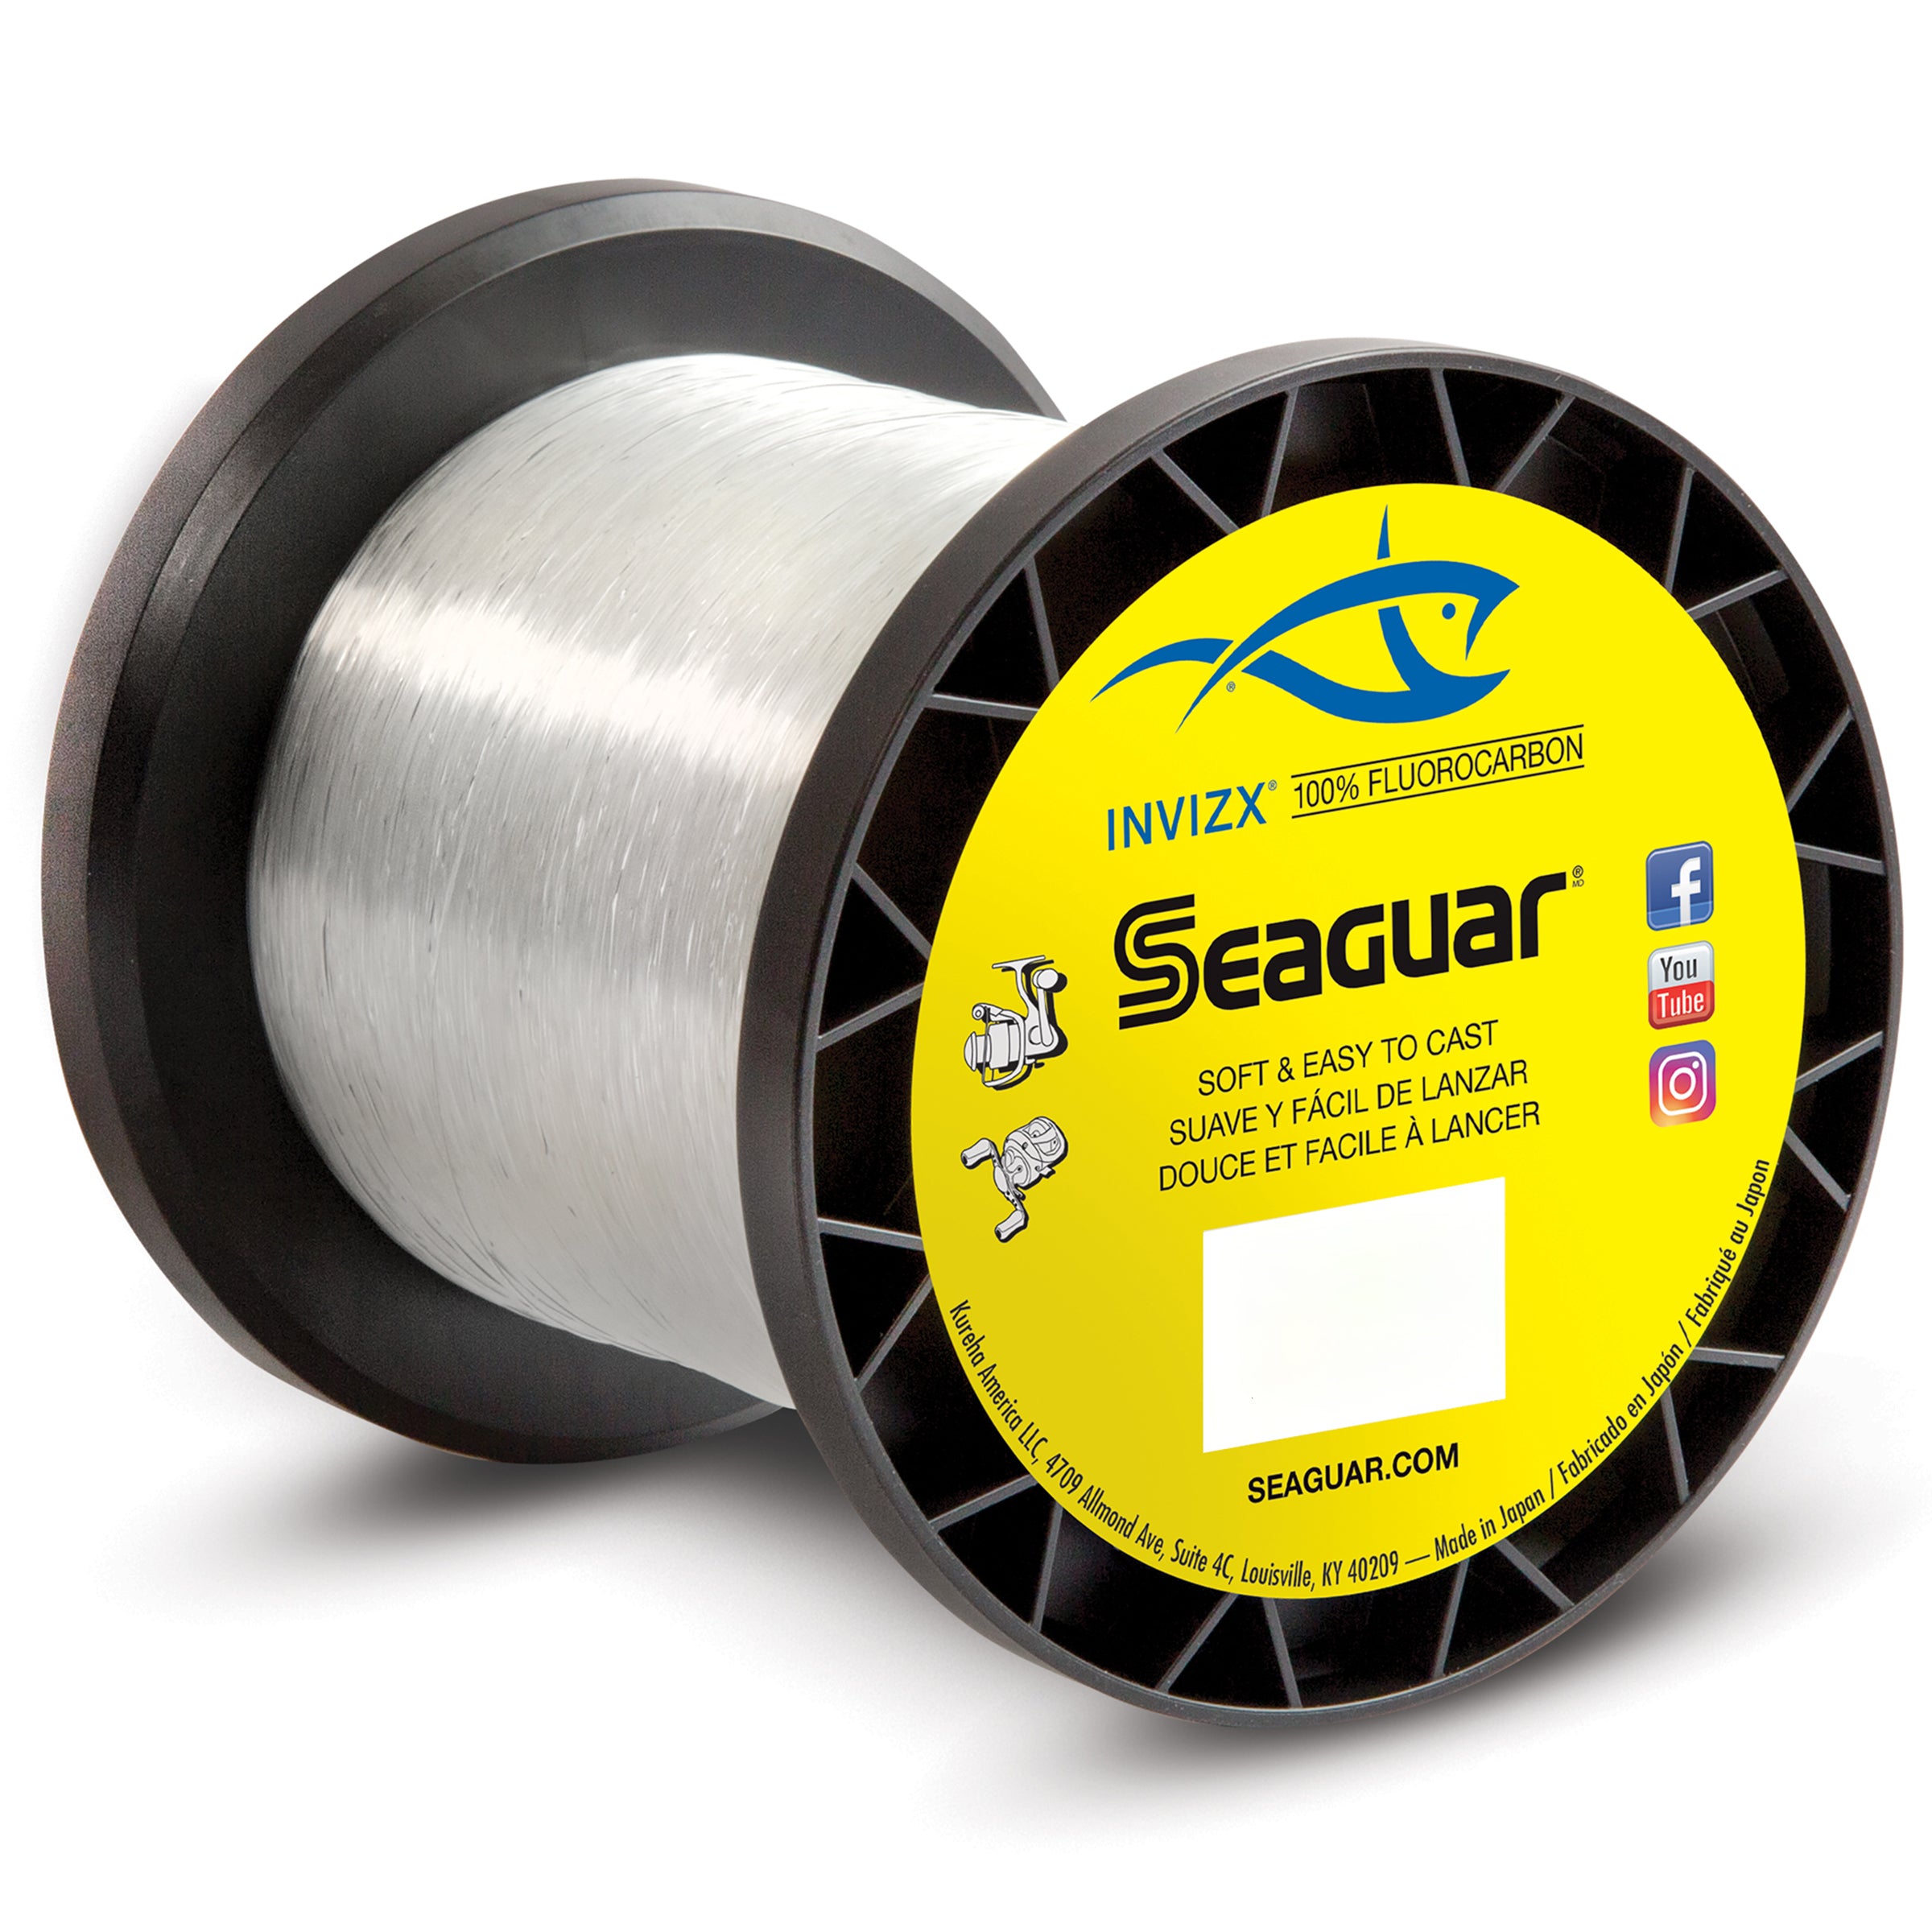 Seaguar Invizx Fluorocarbon 17lb 1000yd